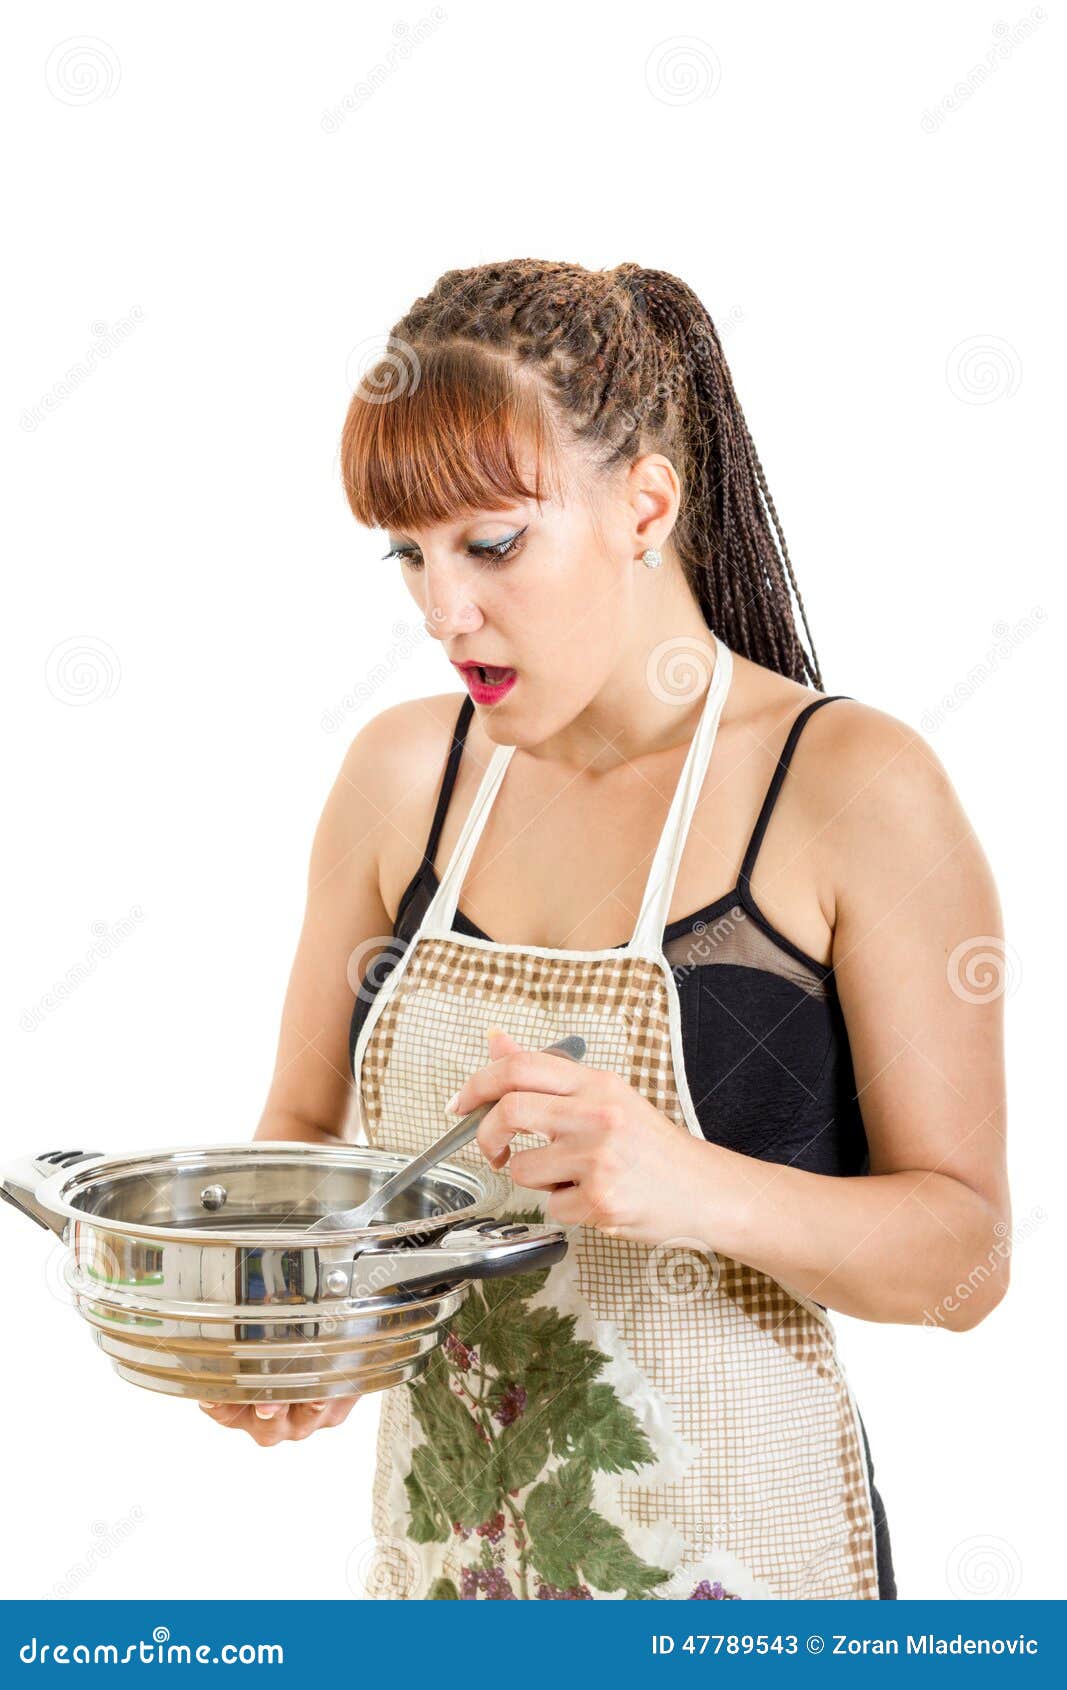 https://thumbs.dreamstime.com/z/surprised-woman-kitchen-stirring-pot-looking-burnt-food-inexperienced-cook-apron-holding-spoon-looking-47789543.jpg